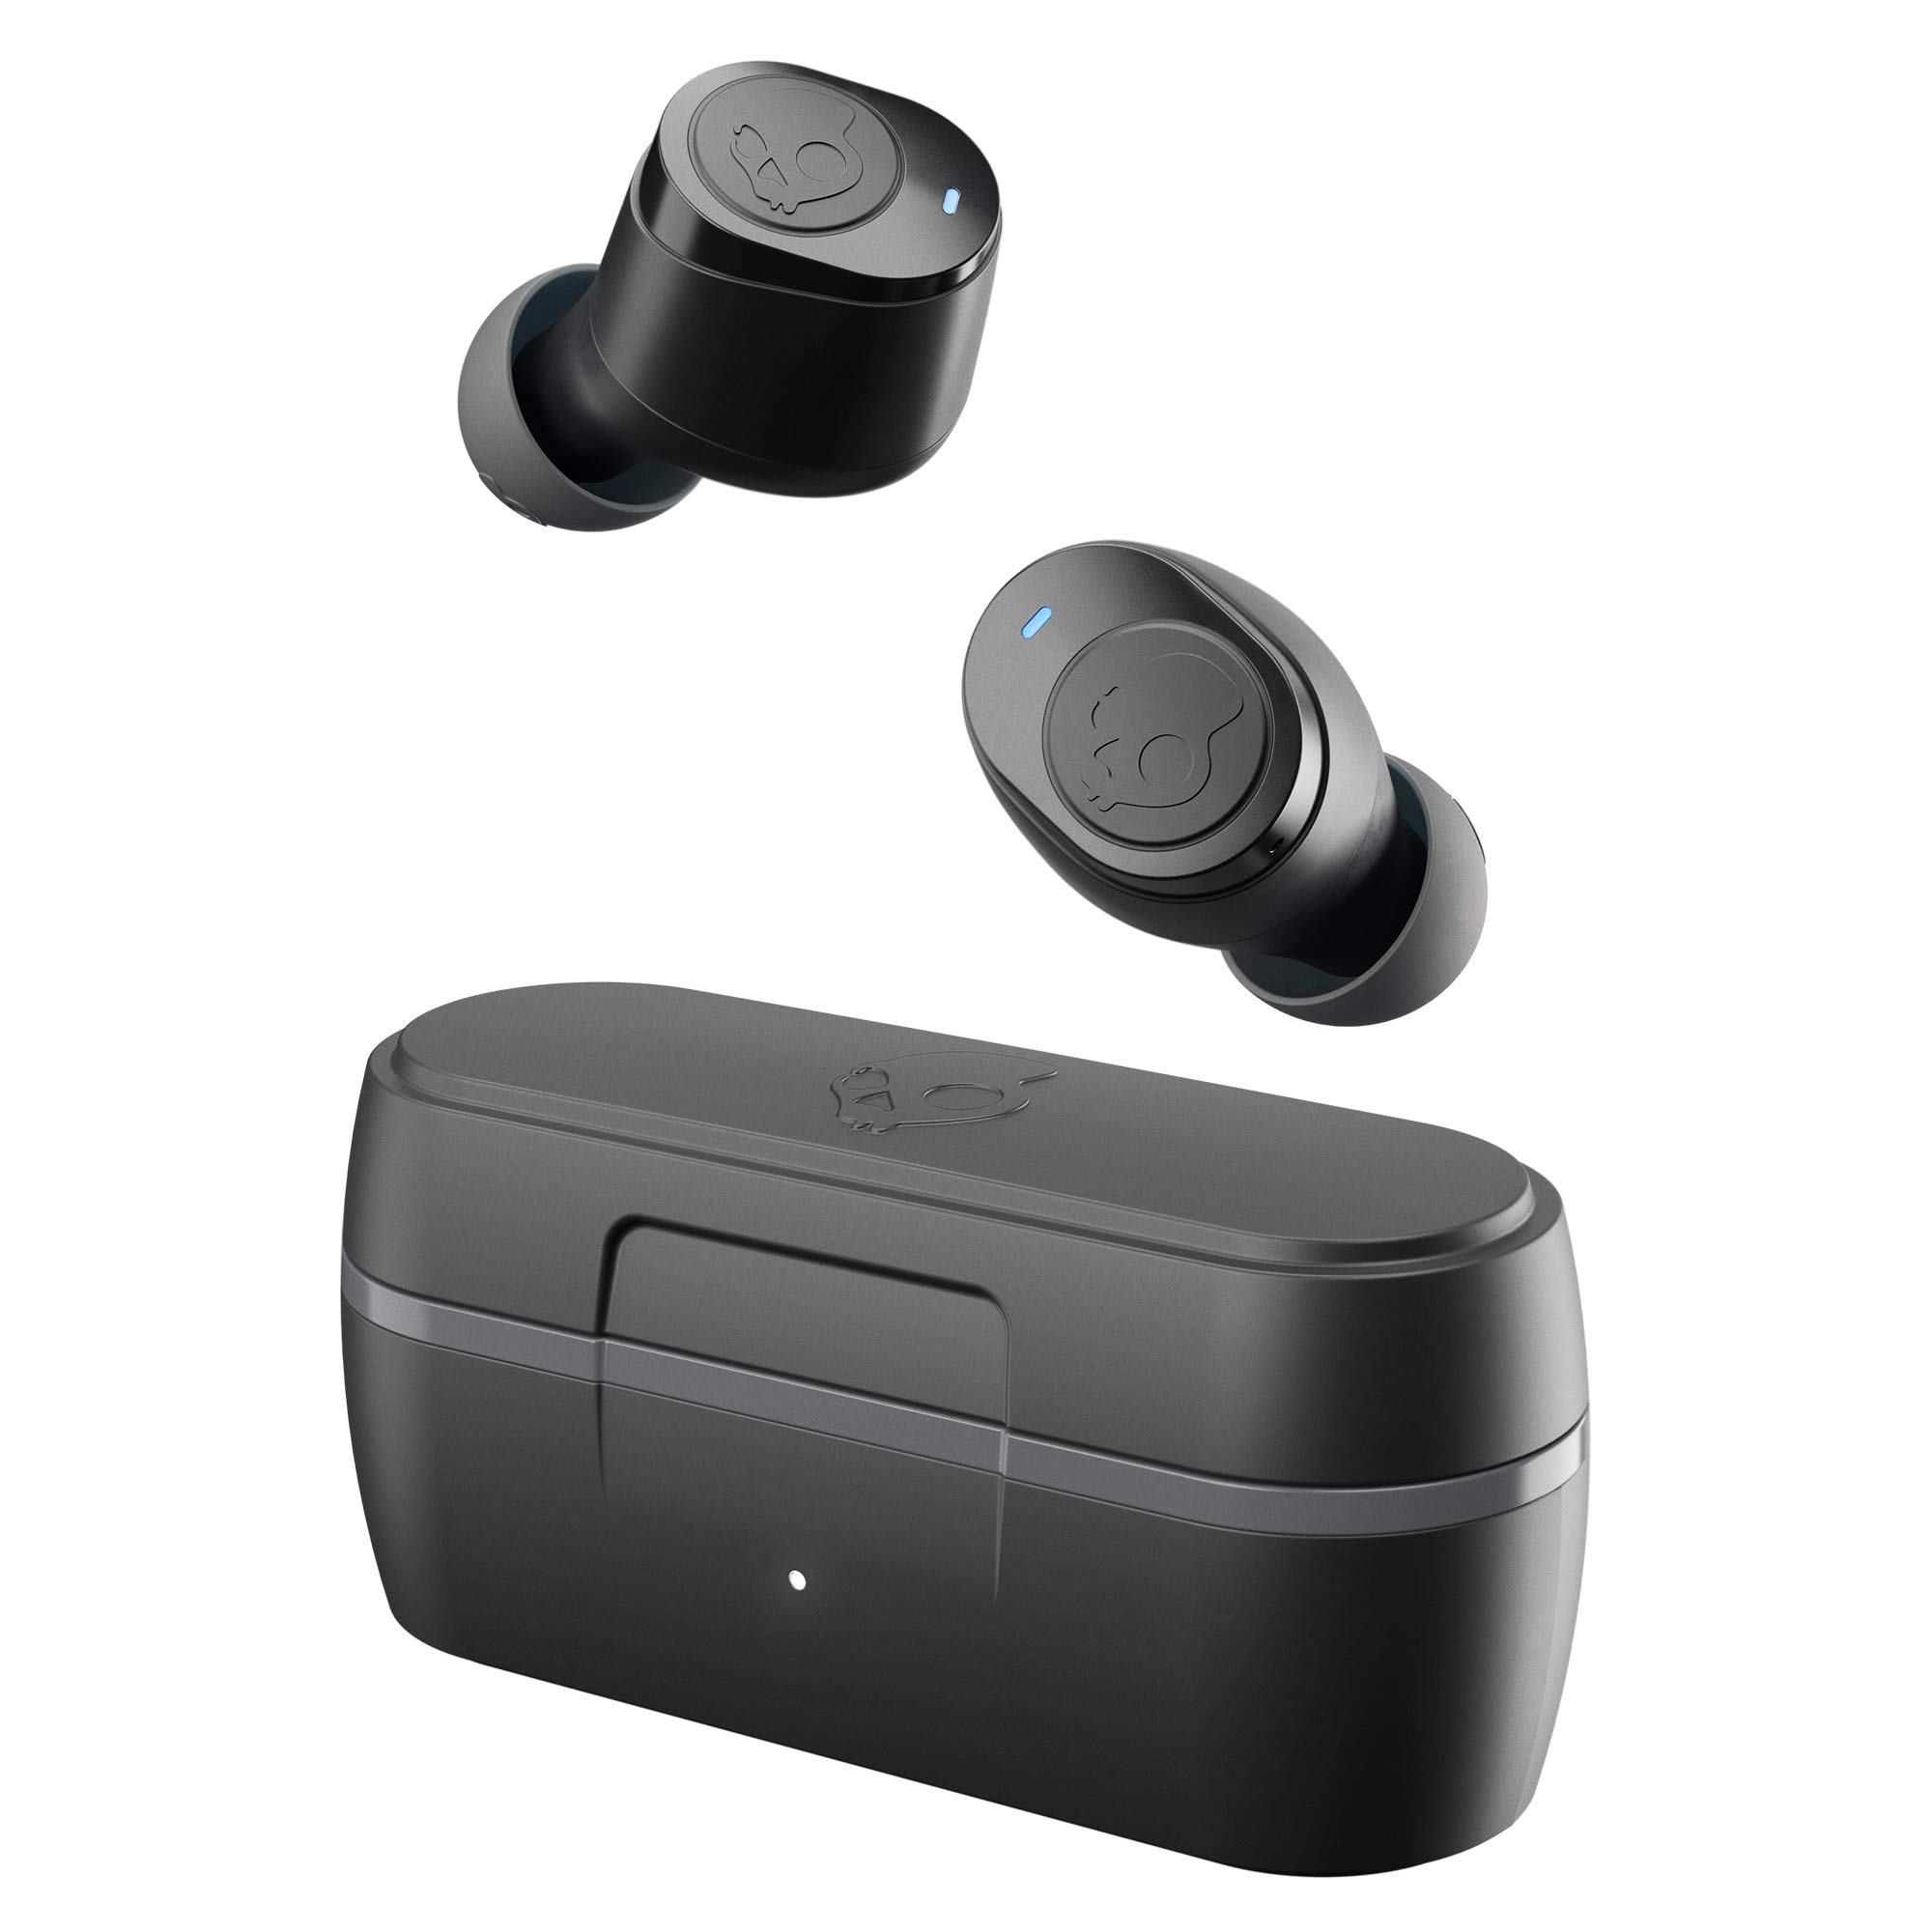 Skullcandy Jib 带麦克风的真无线耳机 / 22 小时电池寿命 / 与 iPhone 和 Android 配合使用 / 最适合健身房和游戏 / 蓝牙耳塞式耳机 - 黑色